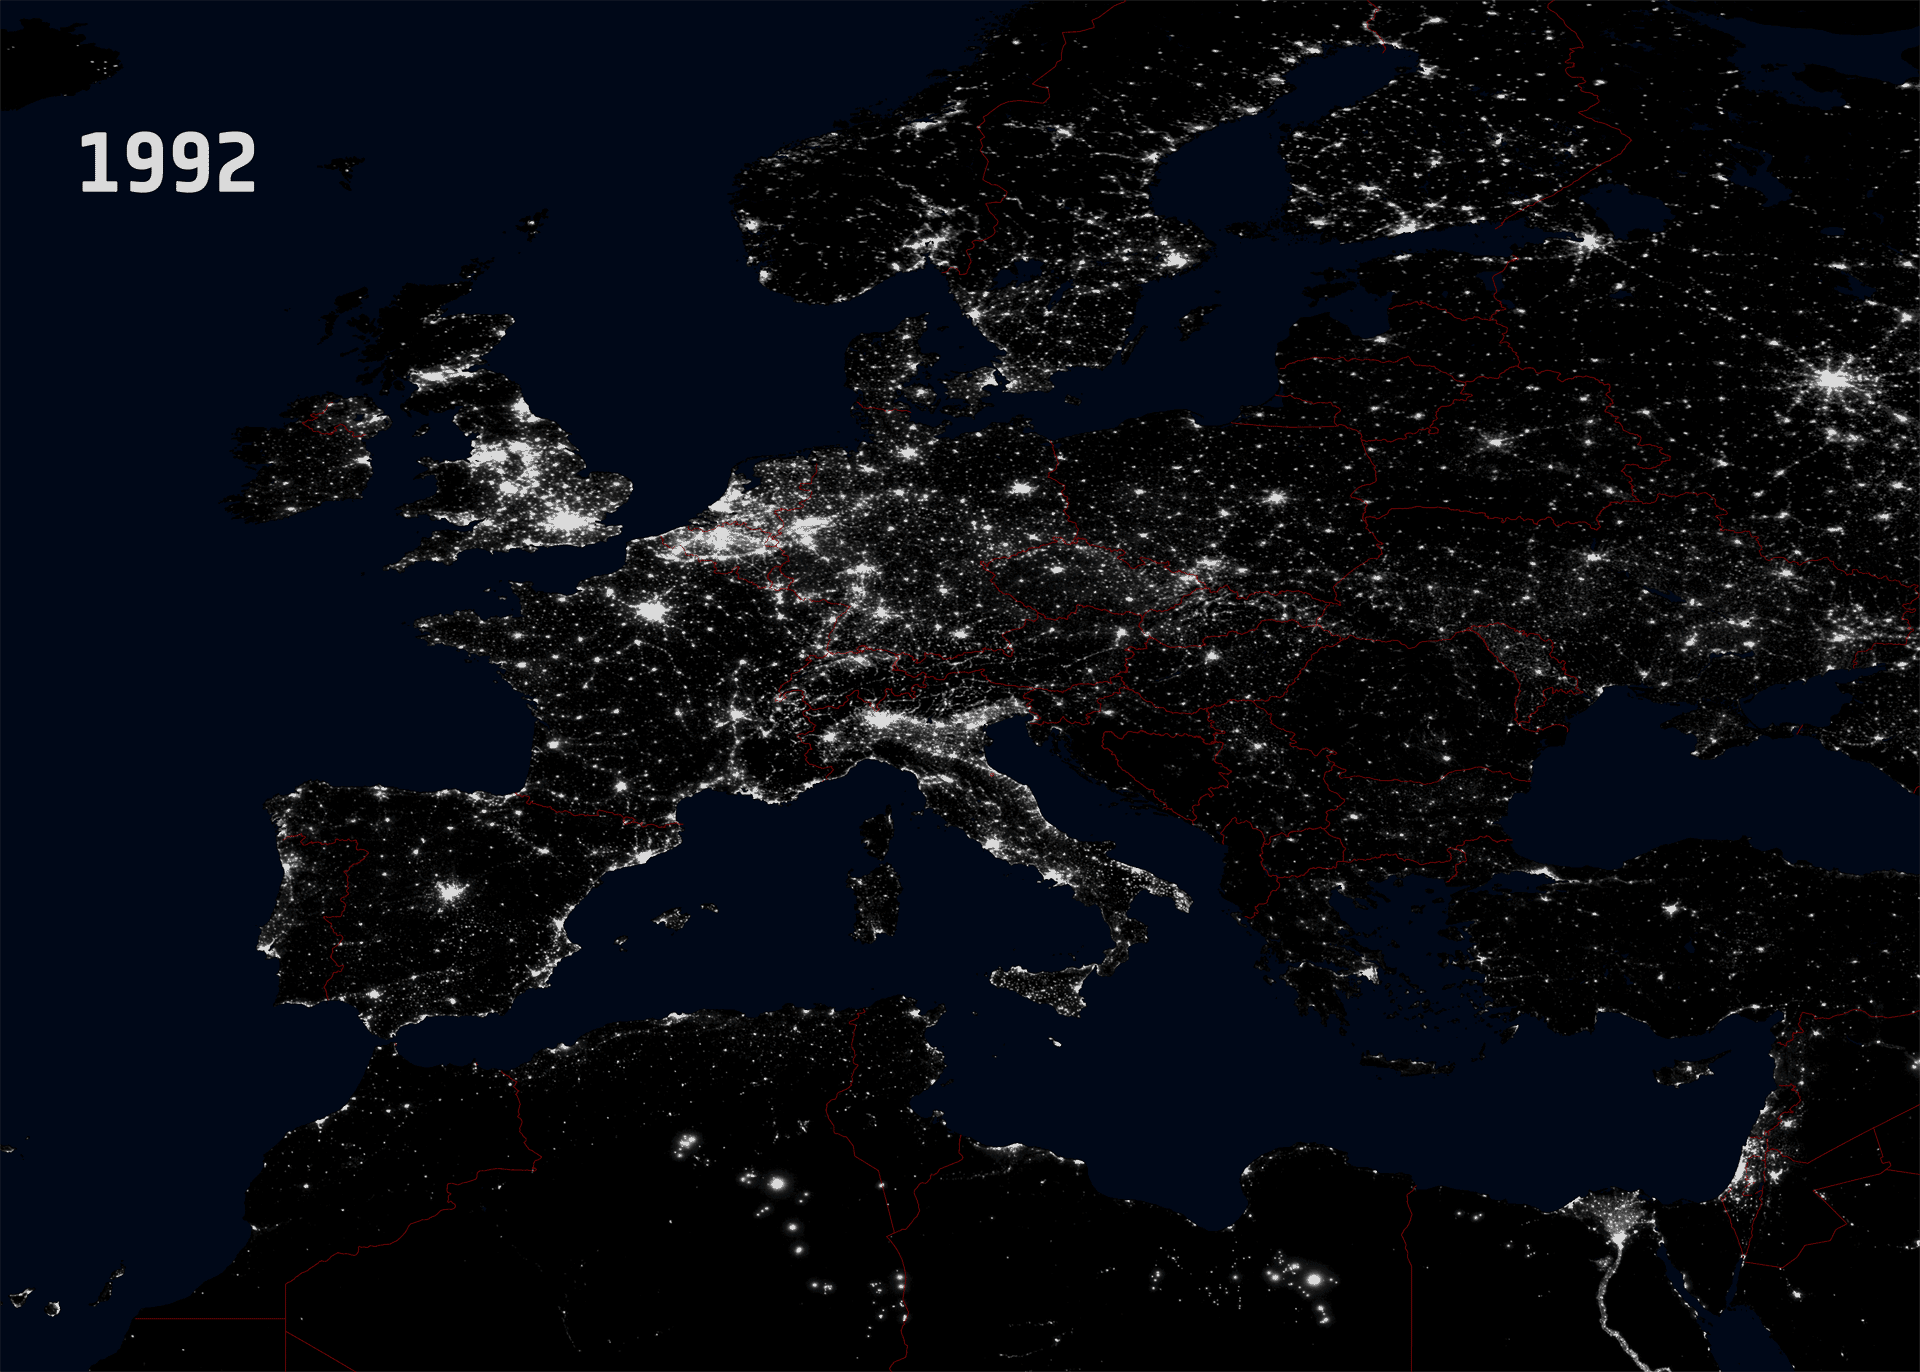 Night lights in Europe